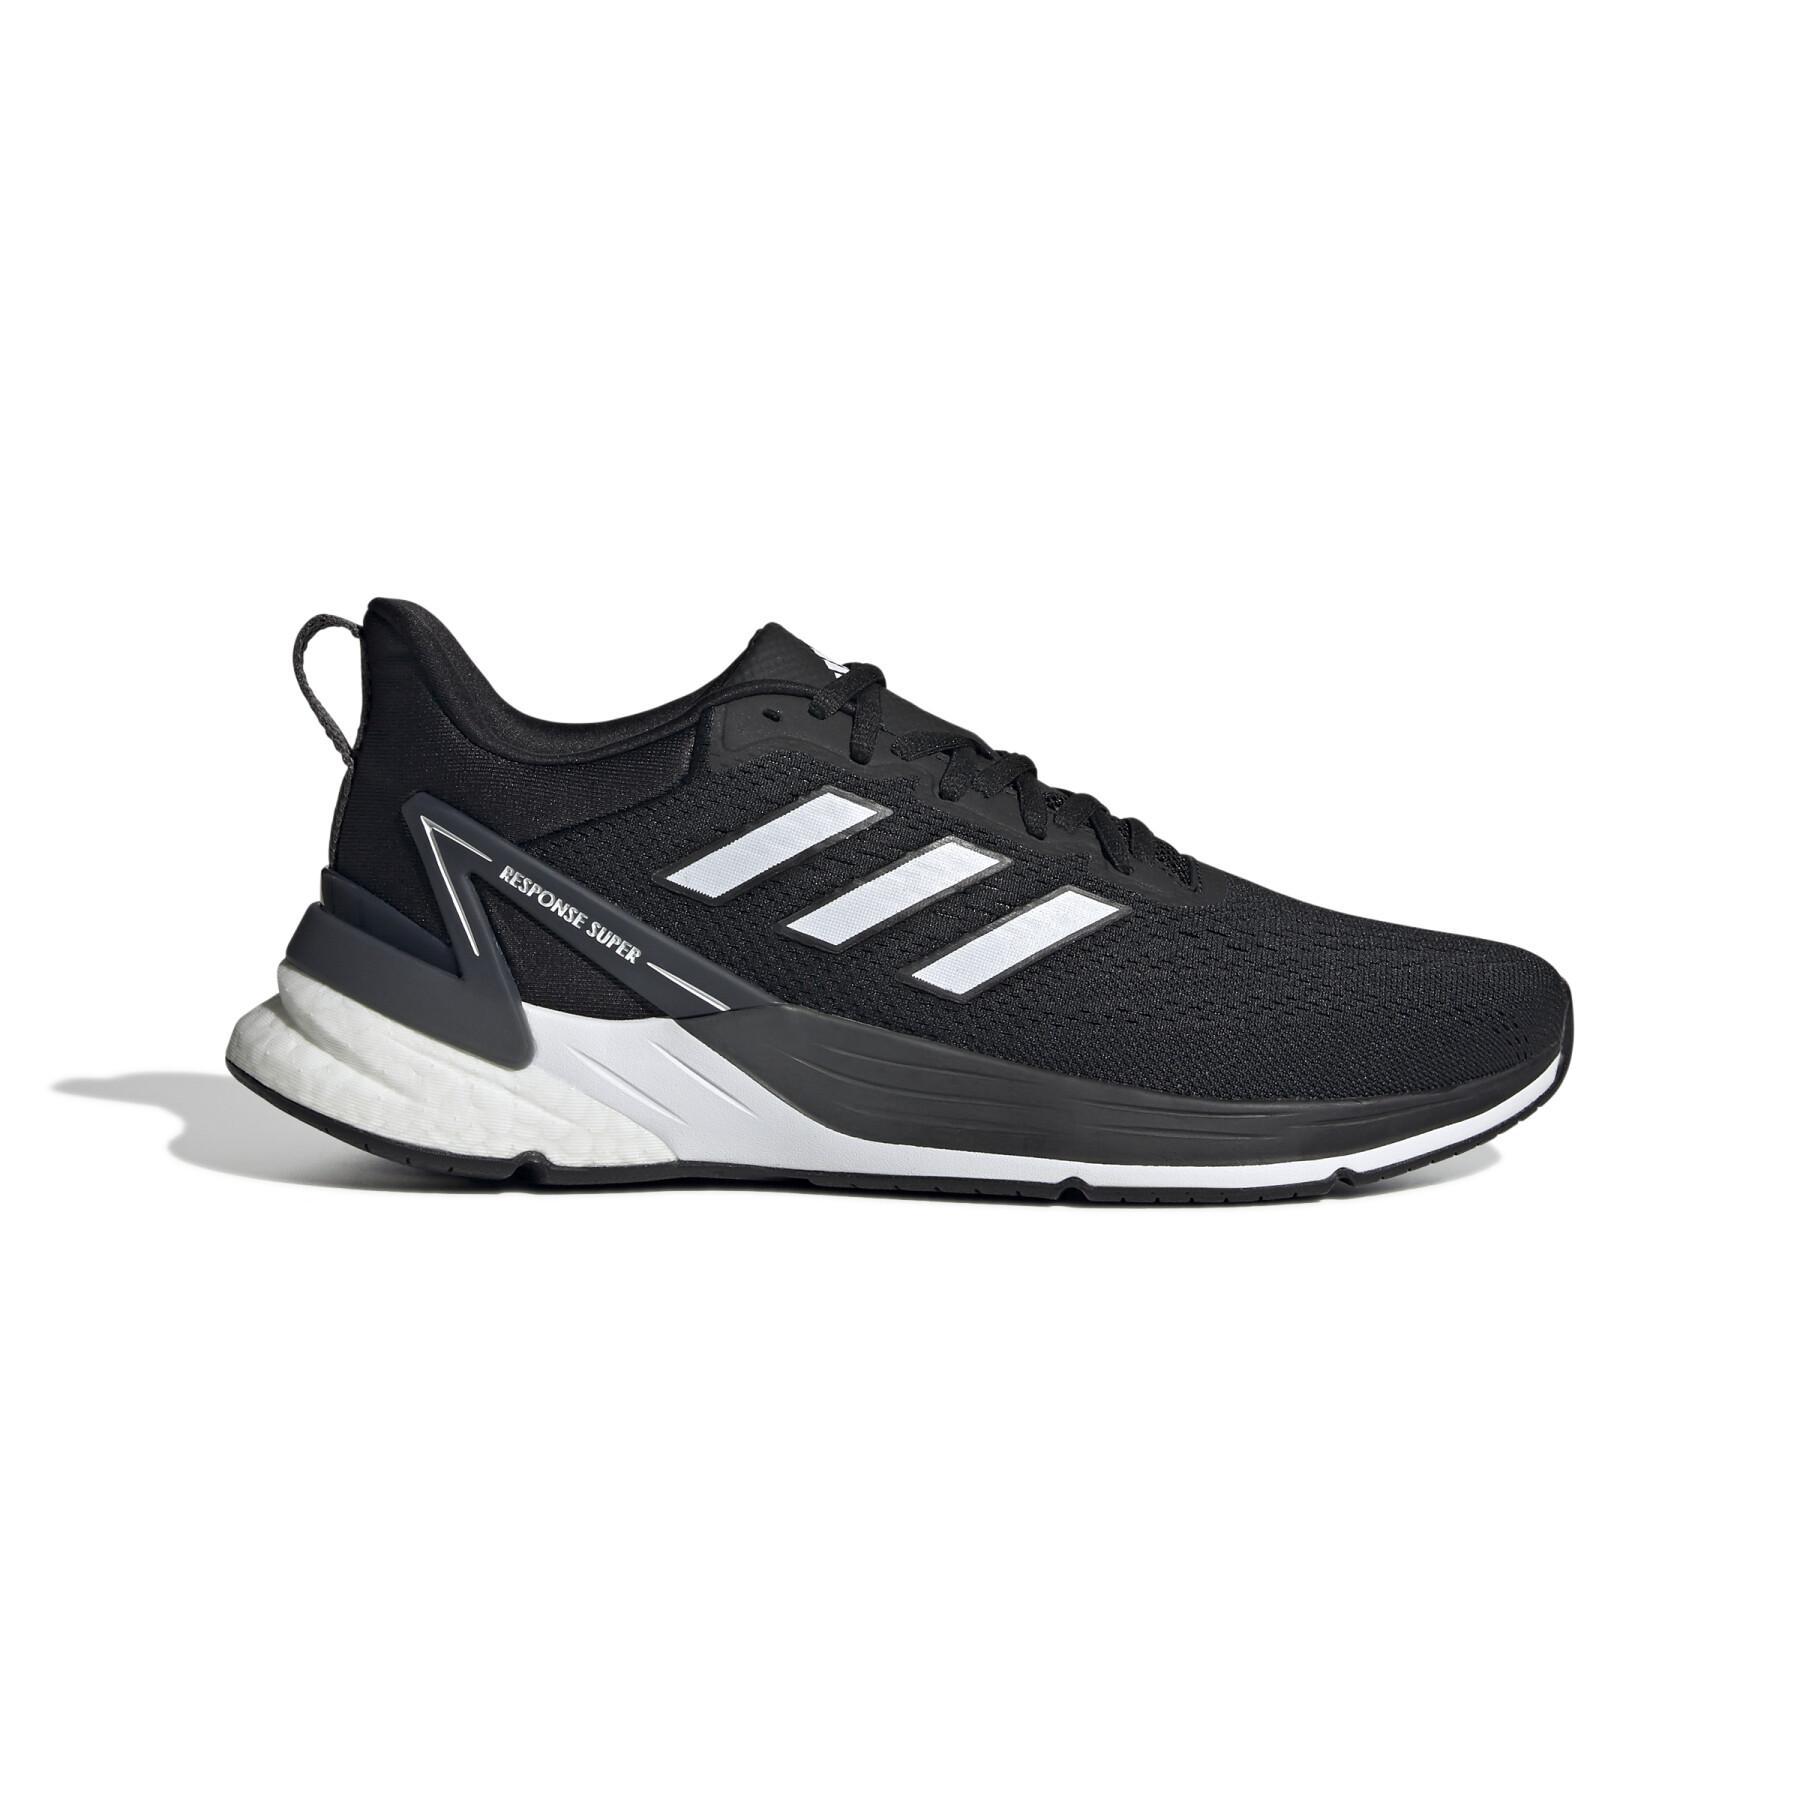 Running shoes adidas Response Super 2.0